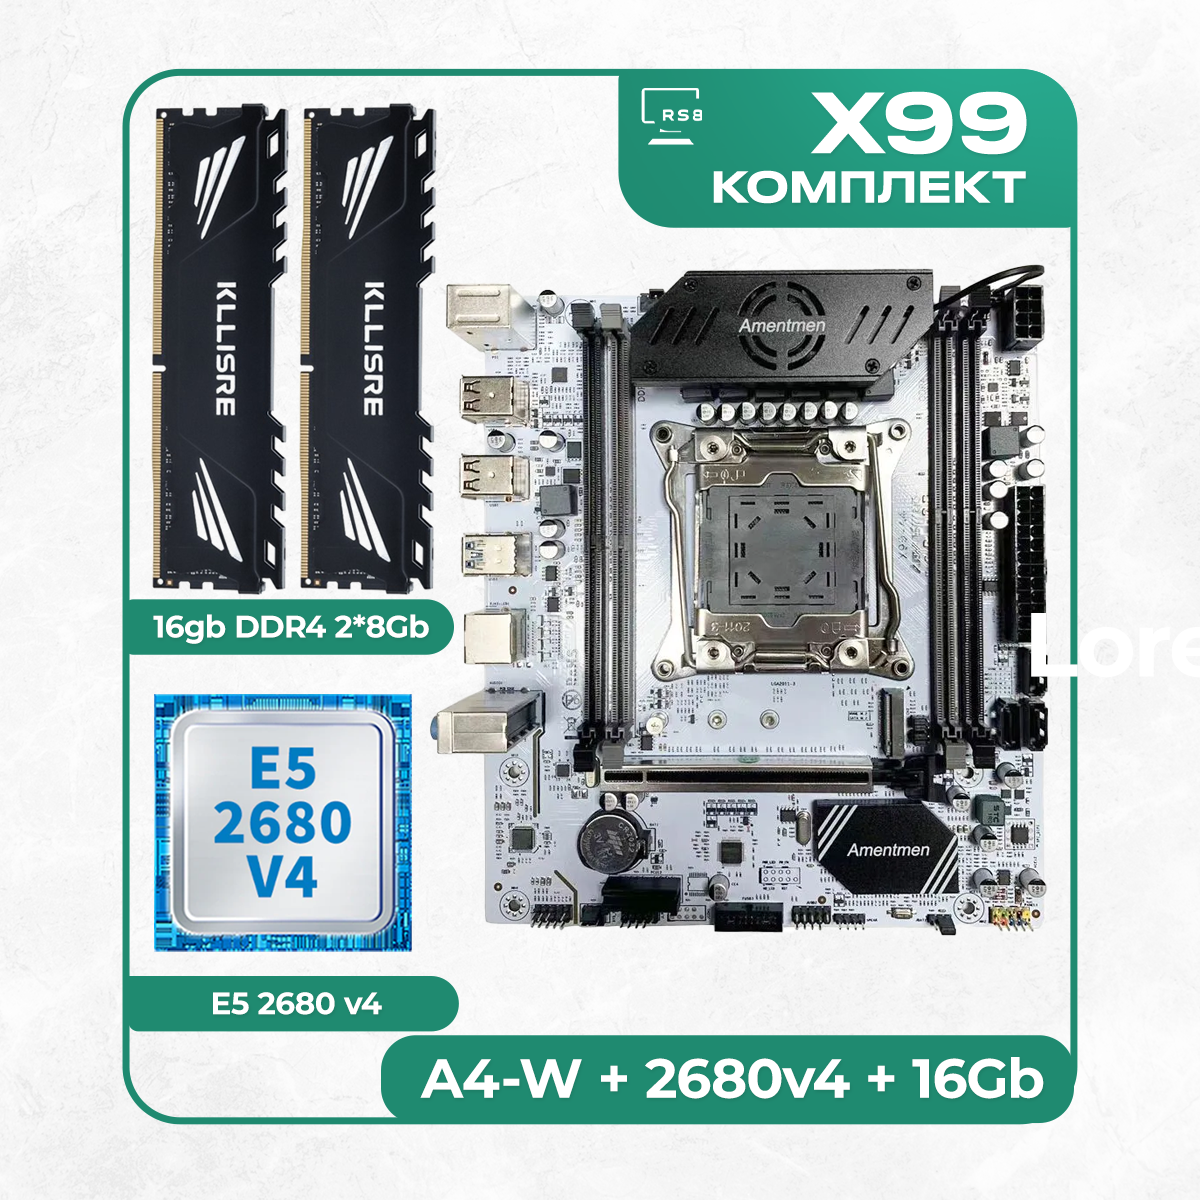 Комплект материнской платы X99: A4-W 2011v3 + Xeon E5 2680v4 + DDR4 Kllisre 2666Mhz 16Гб